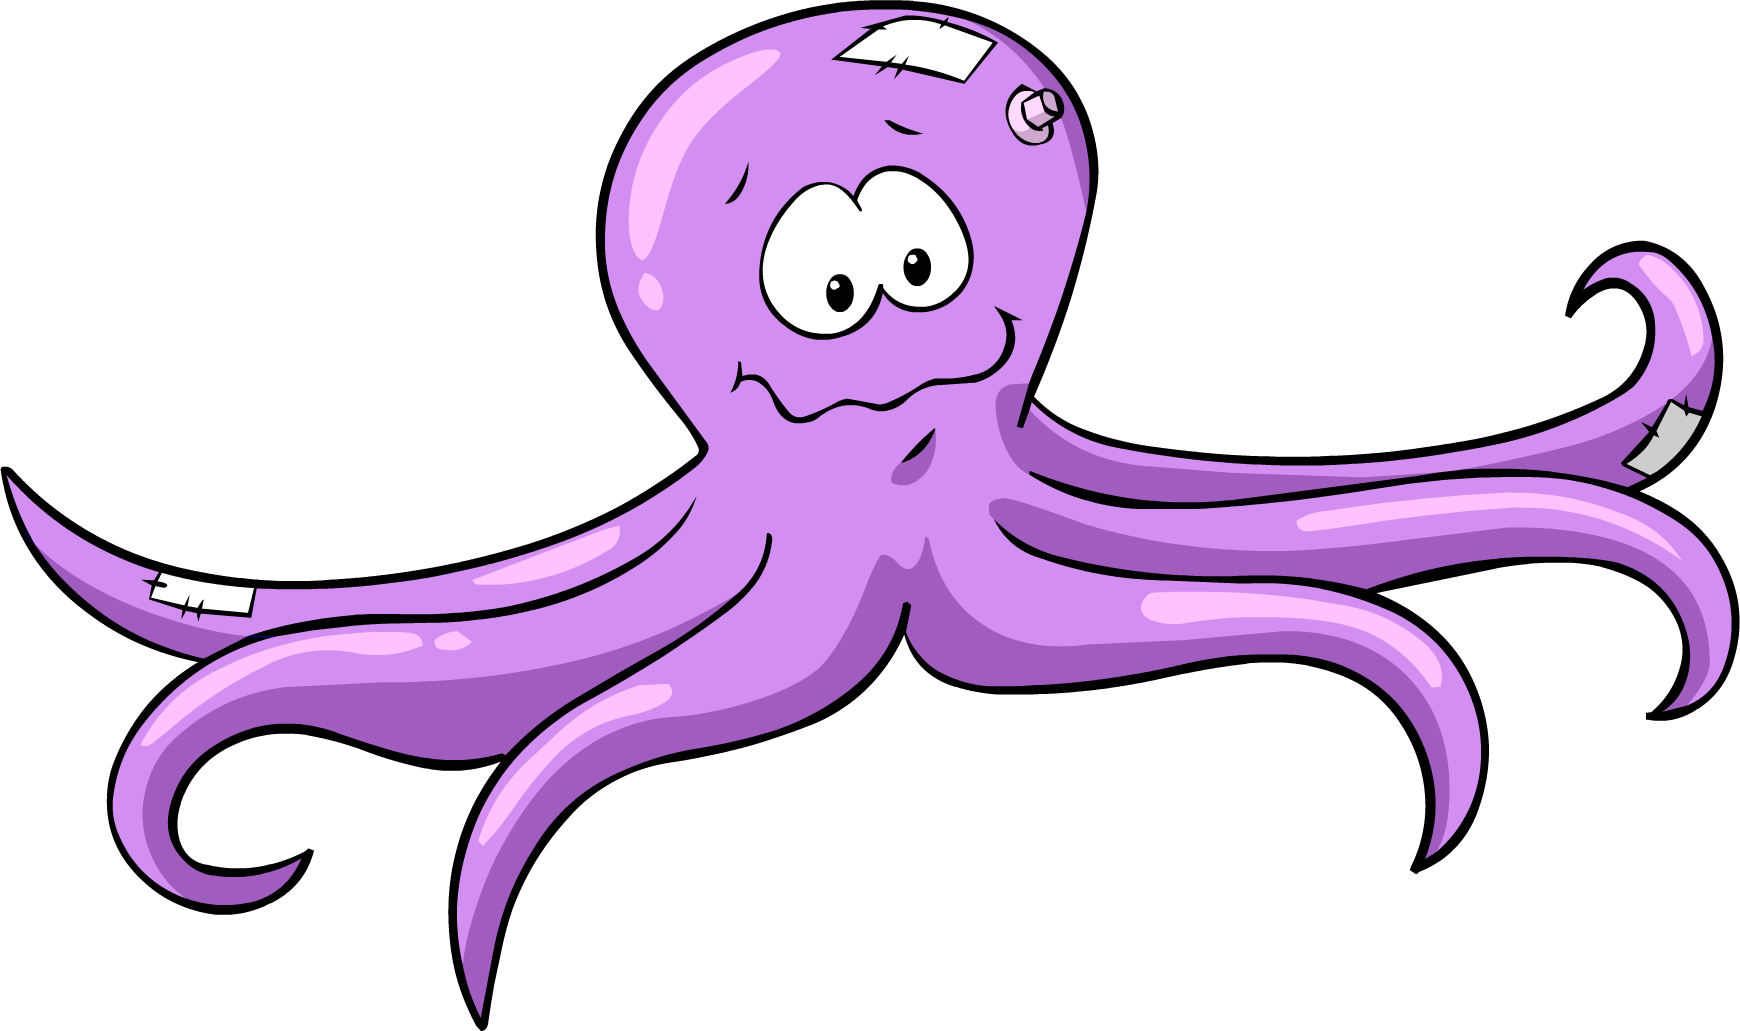 Octopus Download Free Download Image PNG Image